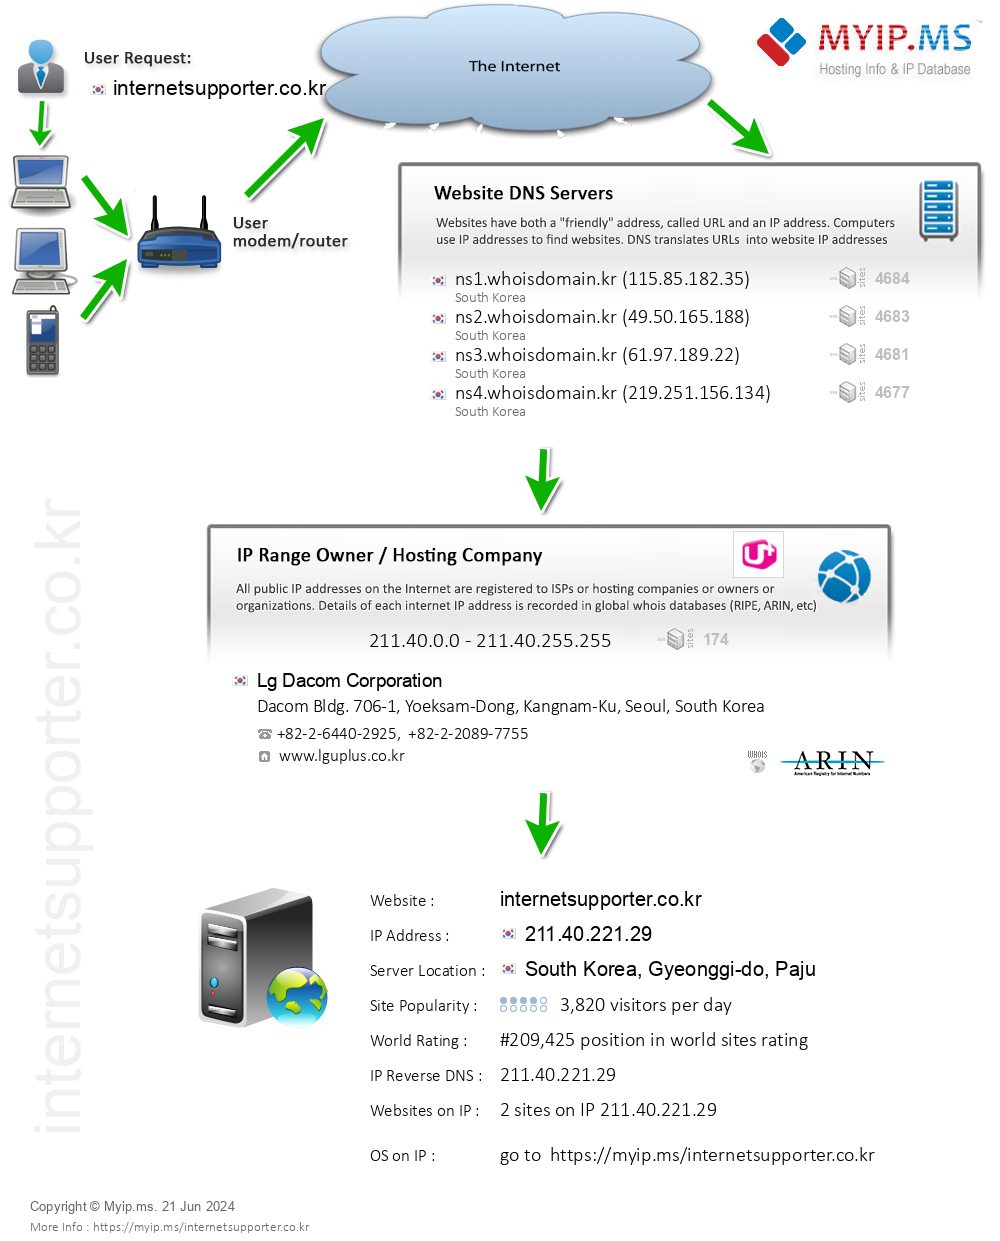 Internetsupporter.co.kr - Website Hosting Visual IP Diagram